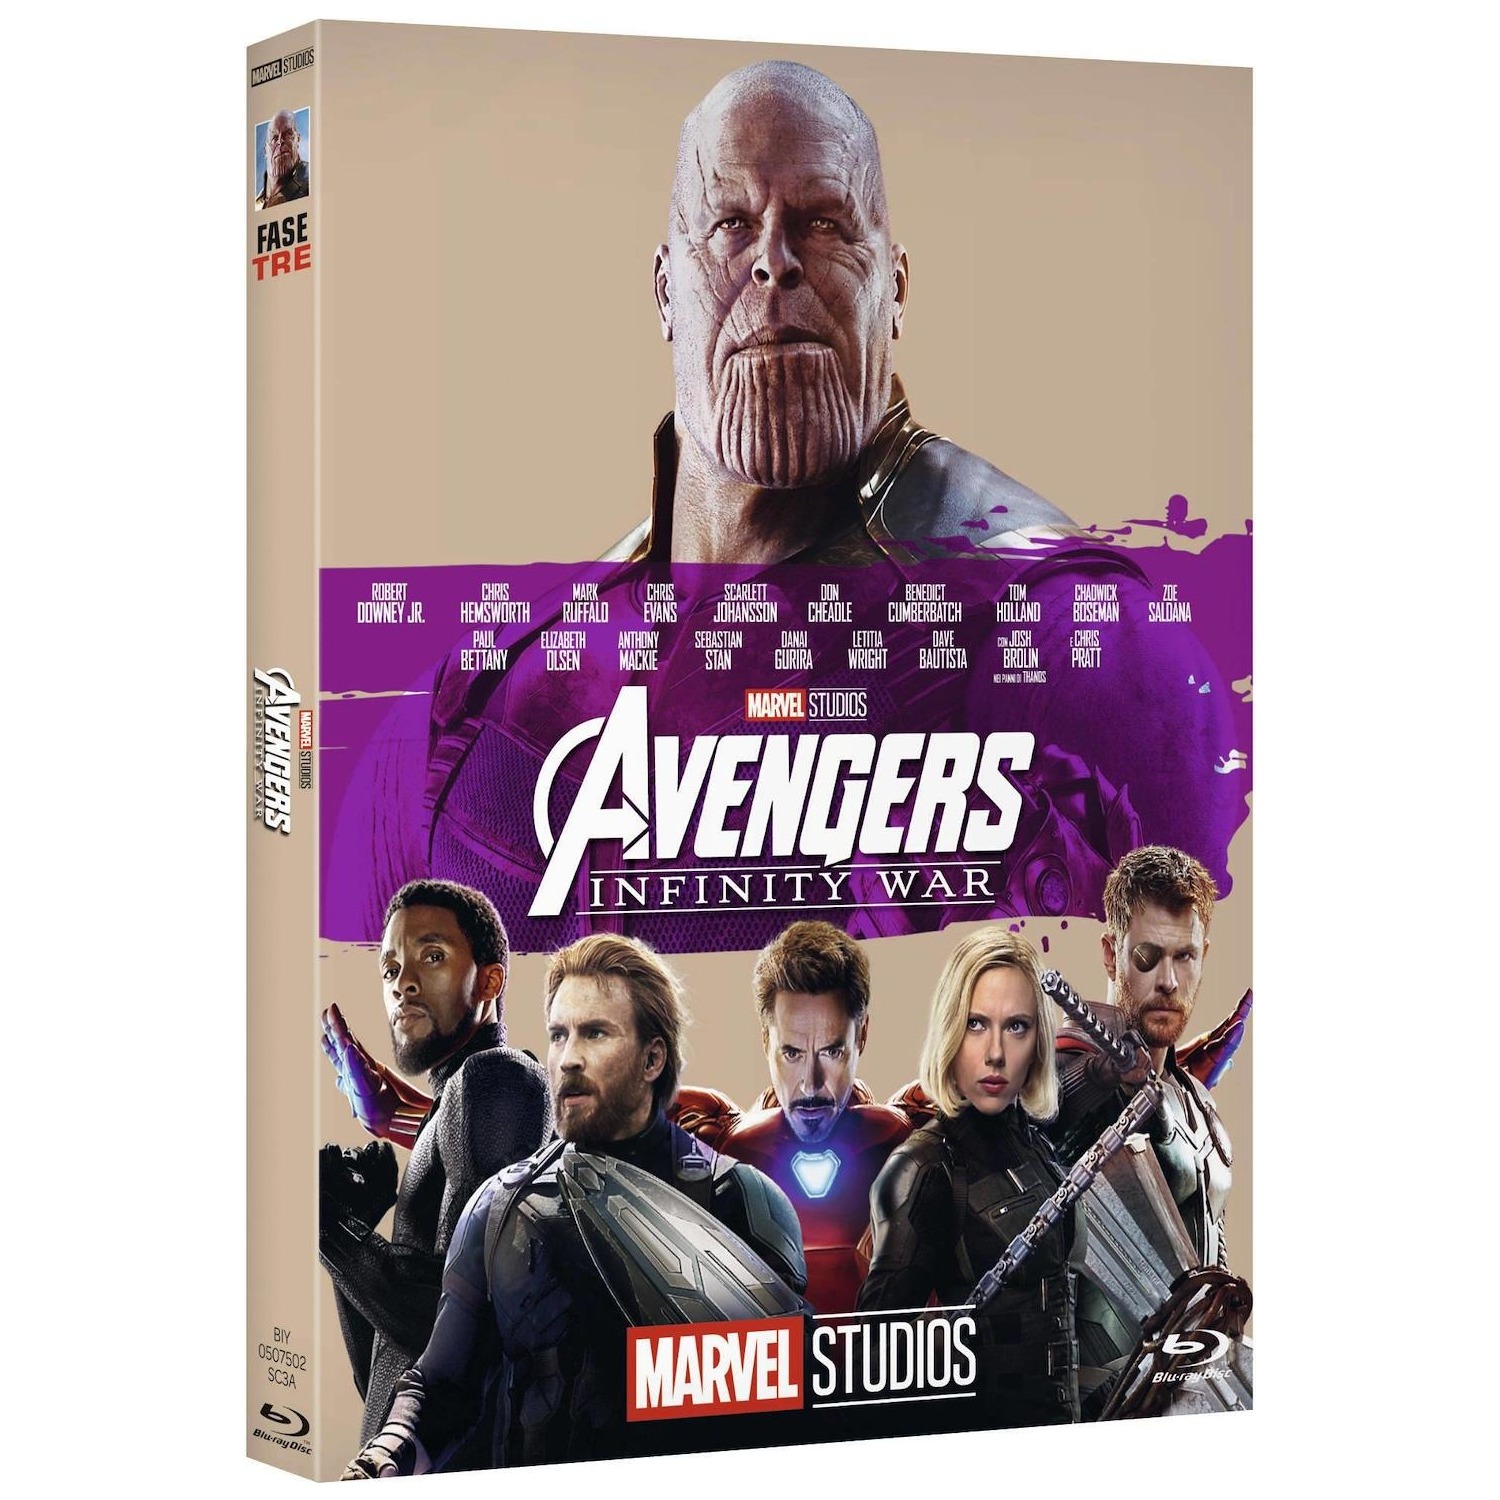 Immagine per Bluray The Avengers Infinity War da DIMOStore